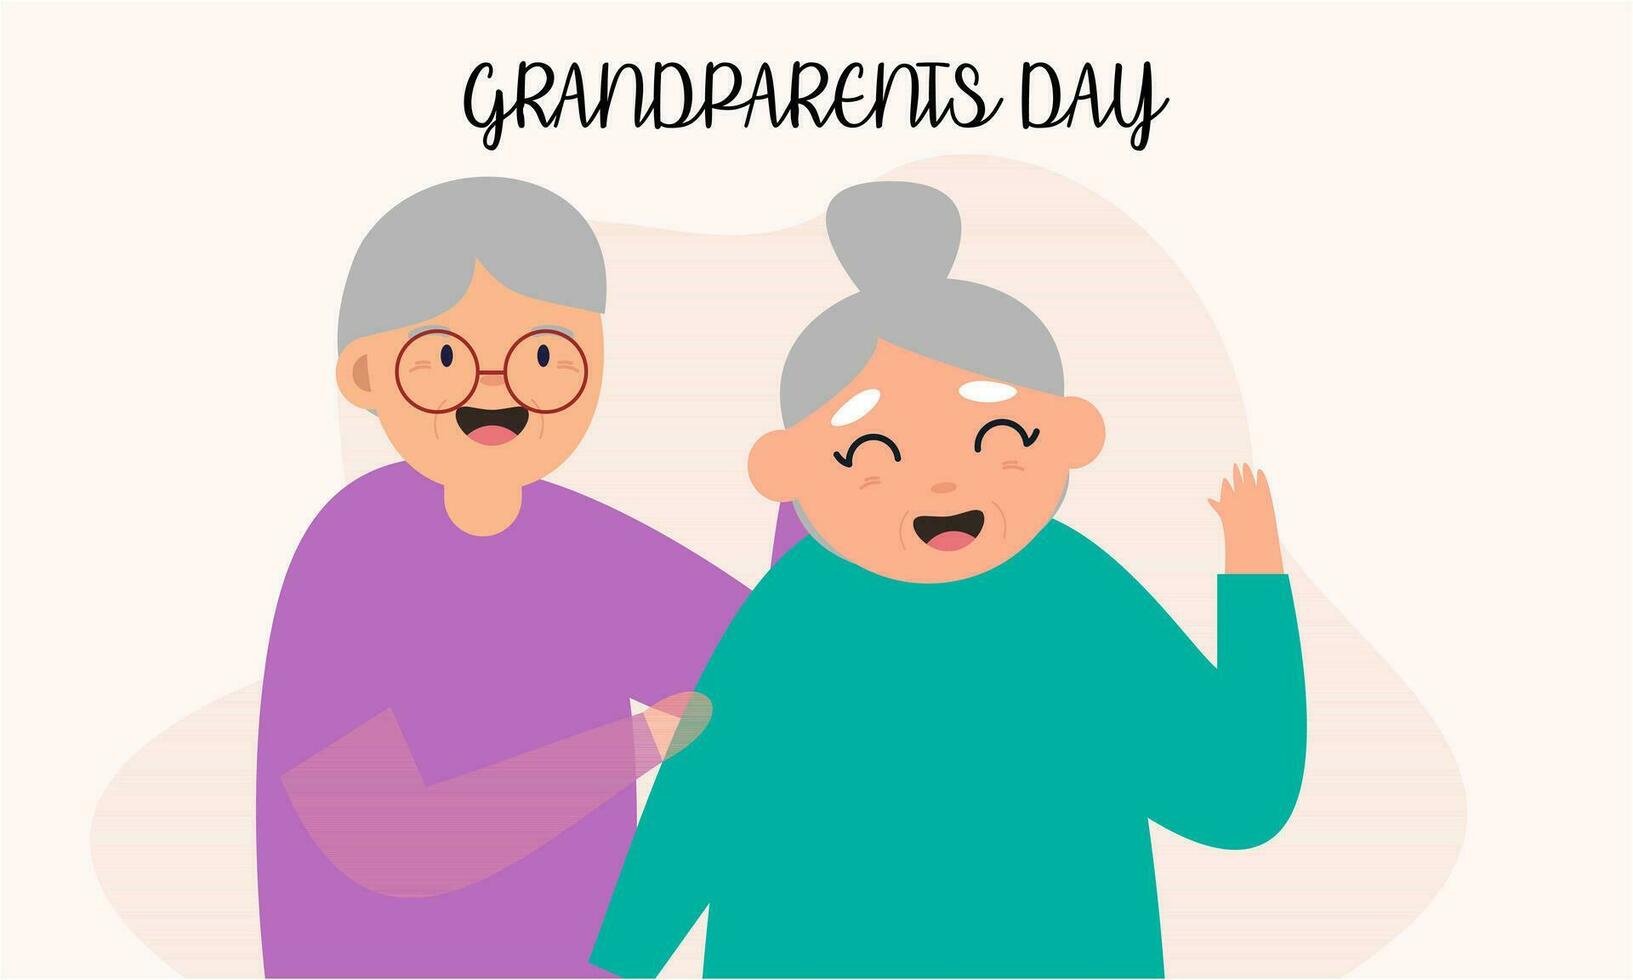 Happy grandparents day, elderly background illustration vector